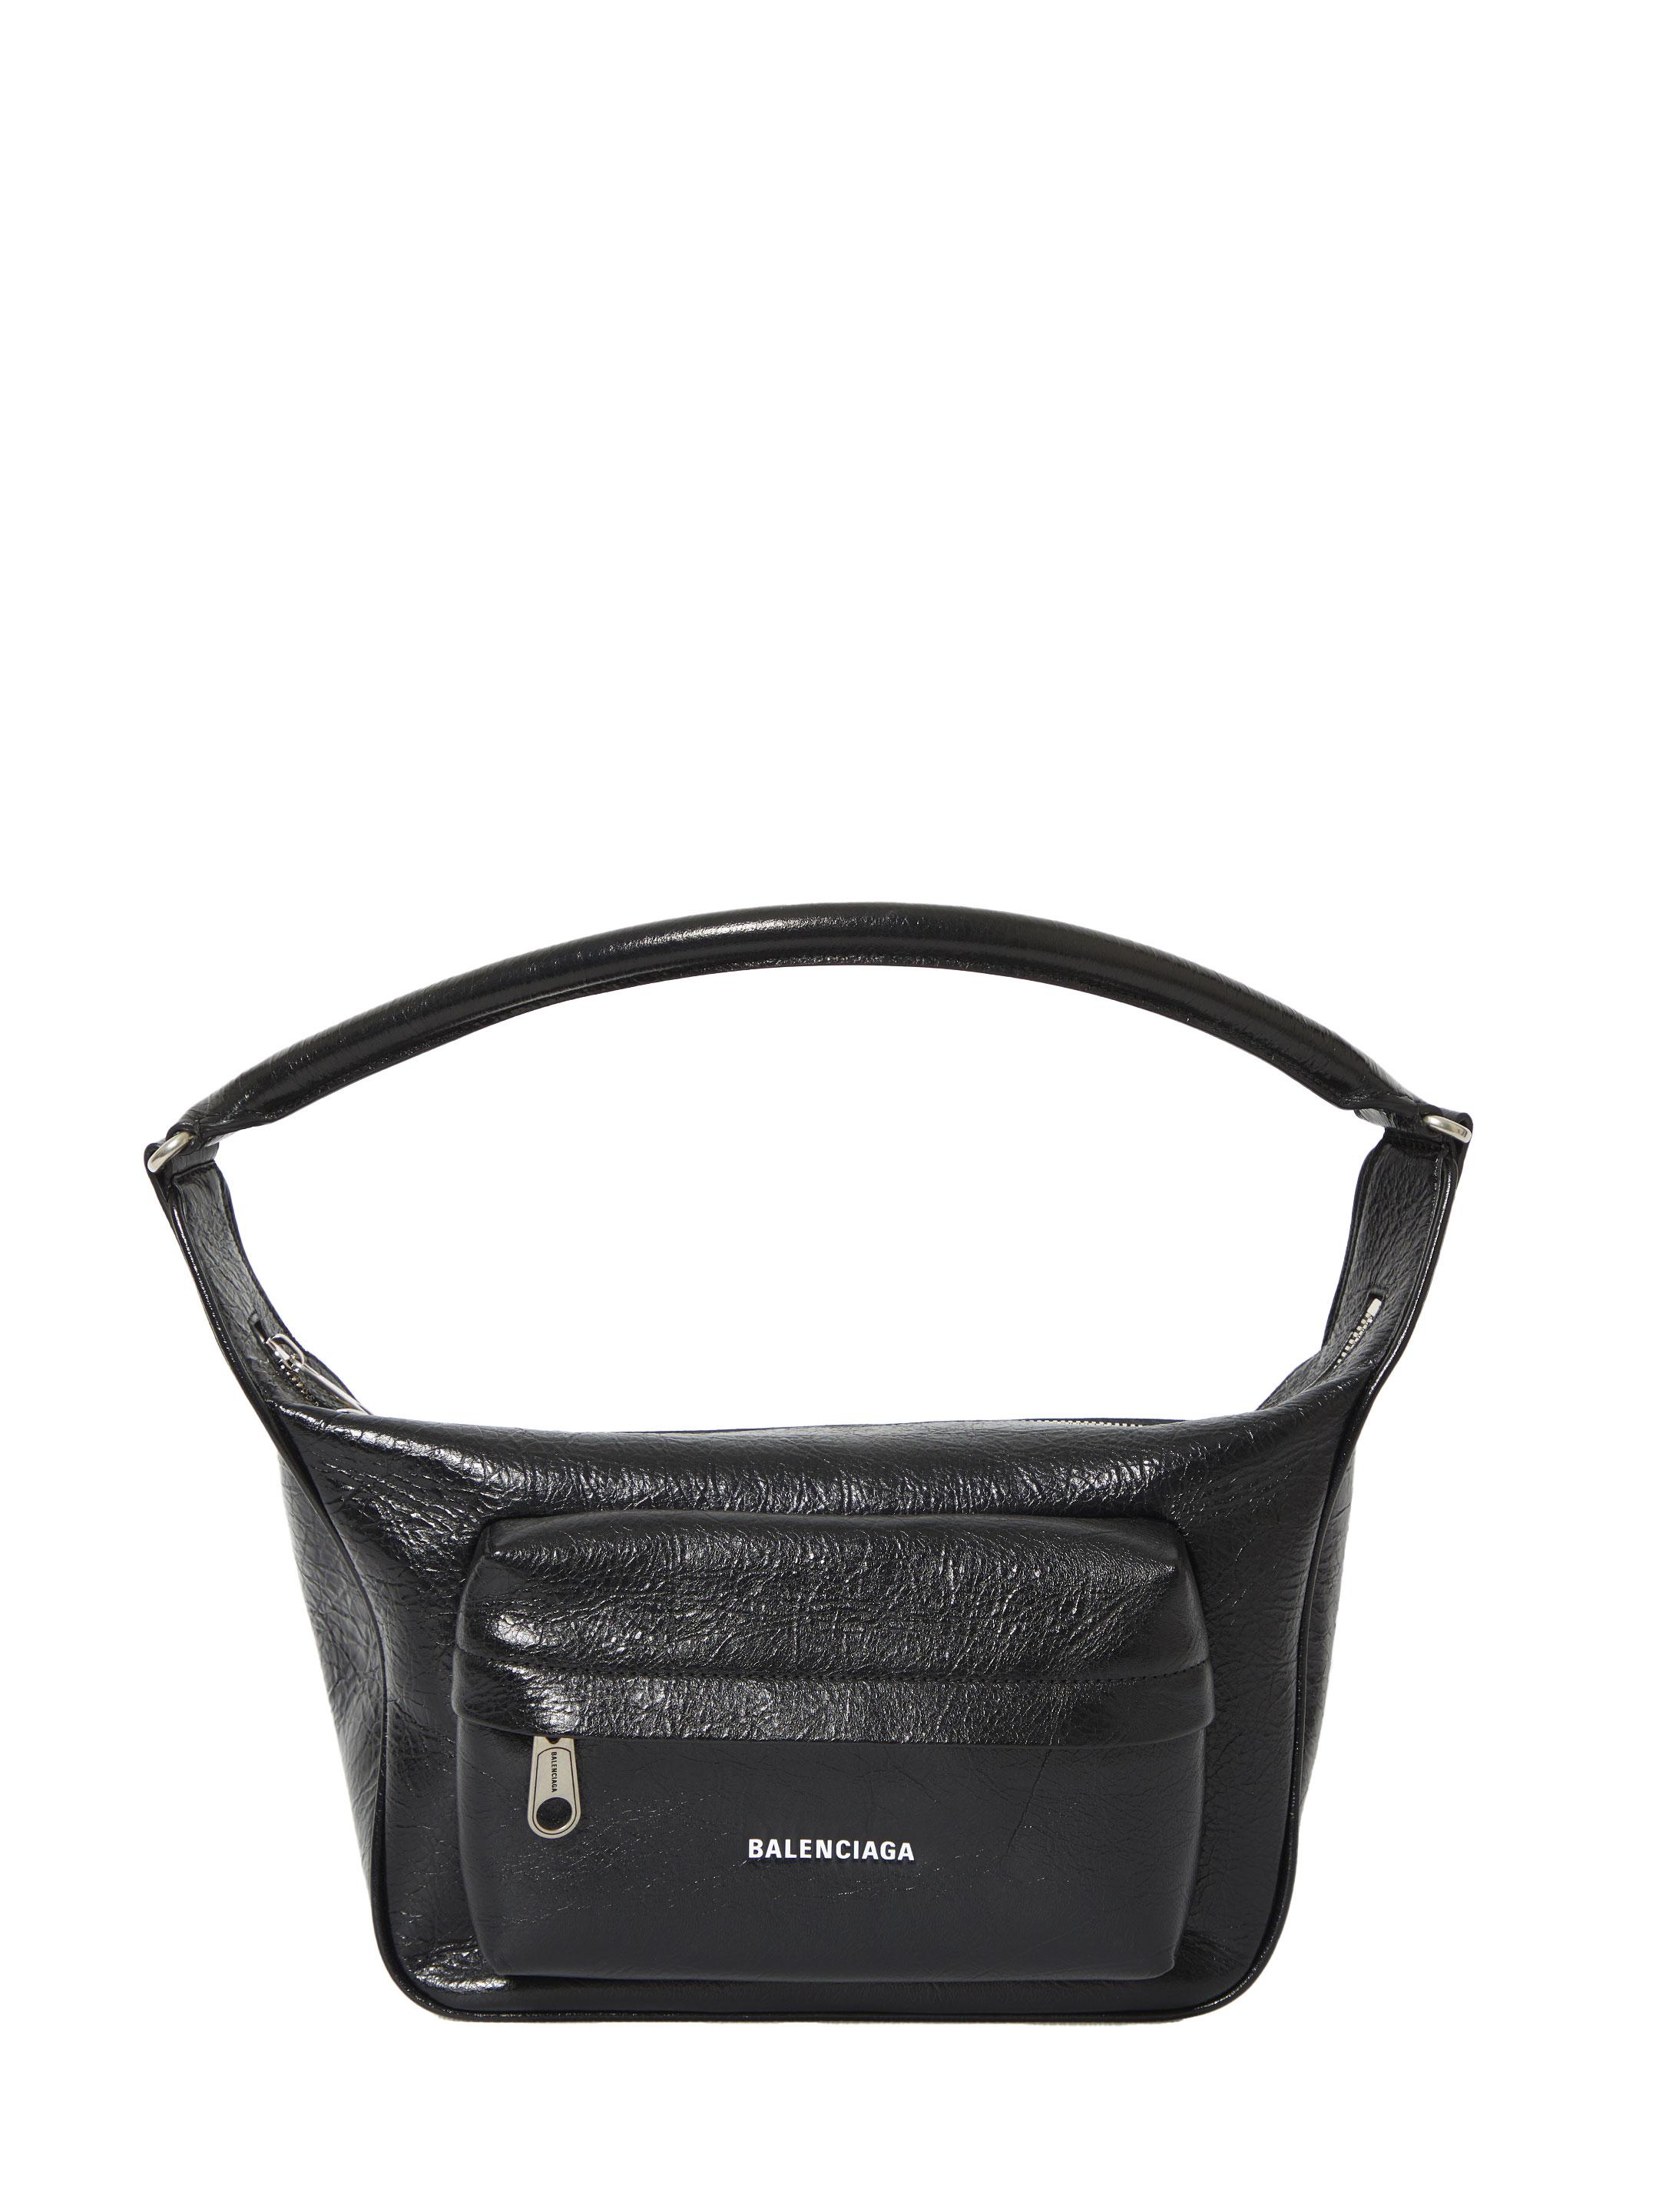 Balenciaga Medium Raver Bag in Black | Lyst